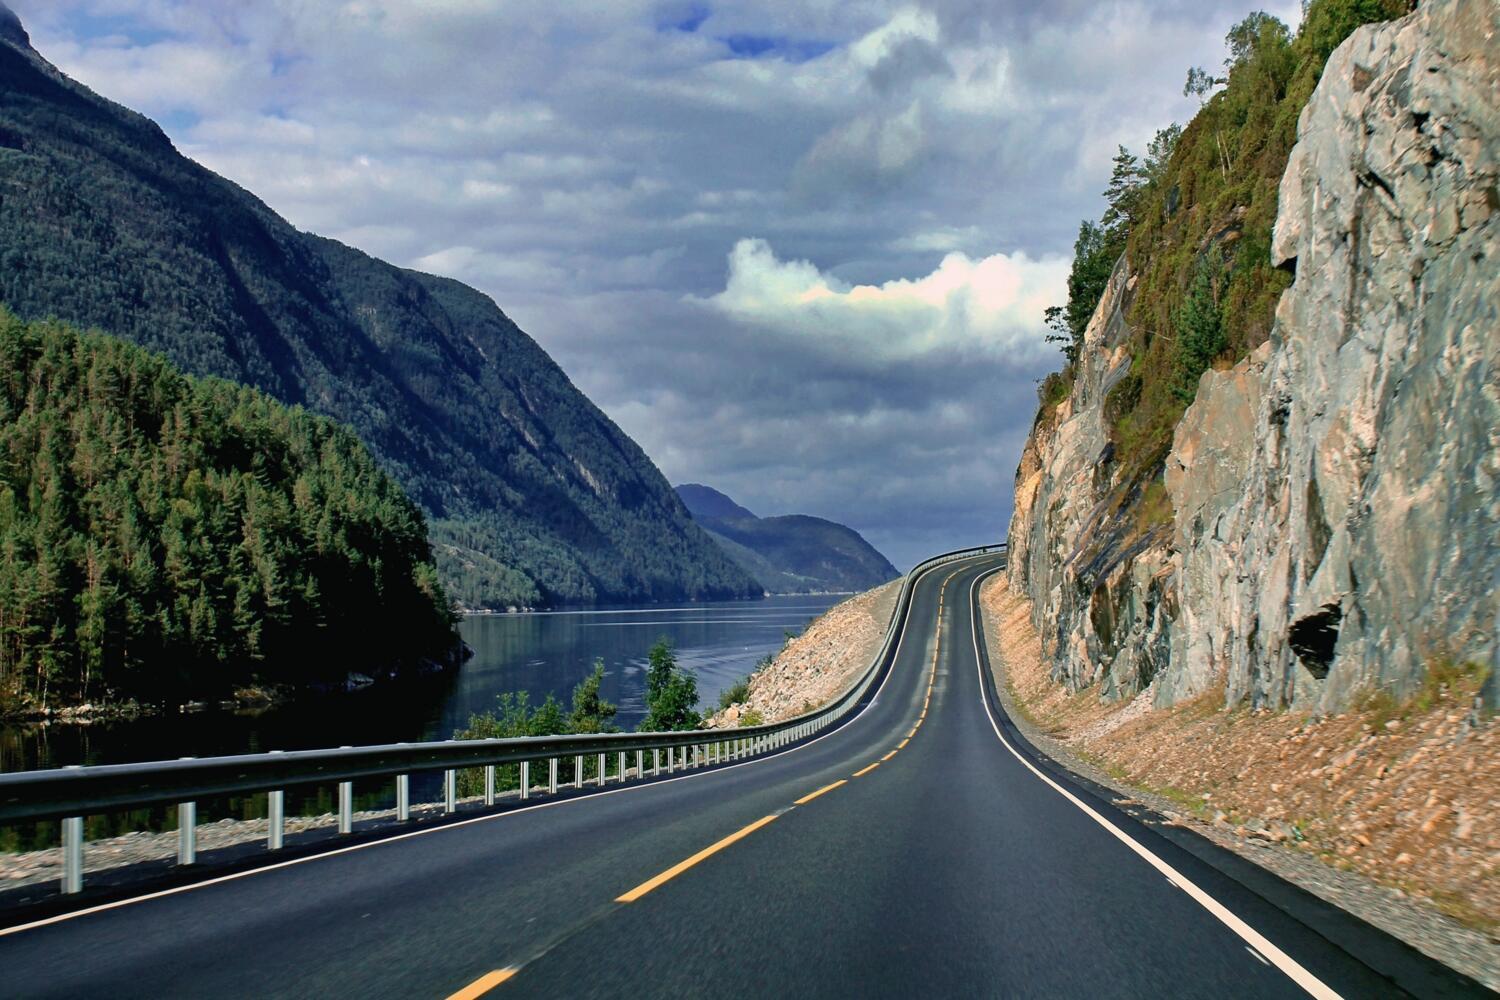 У самого края дороги. Фьорды Норвегии дороги. Дорога. Дорога в Норвегии. Красивая дорога.